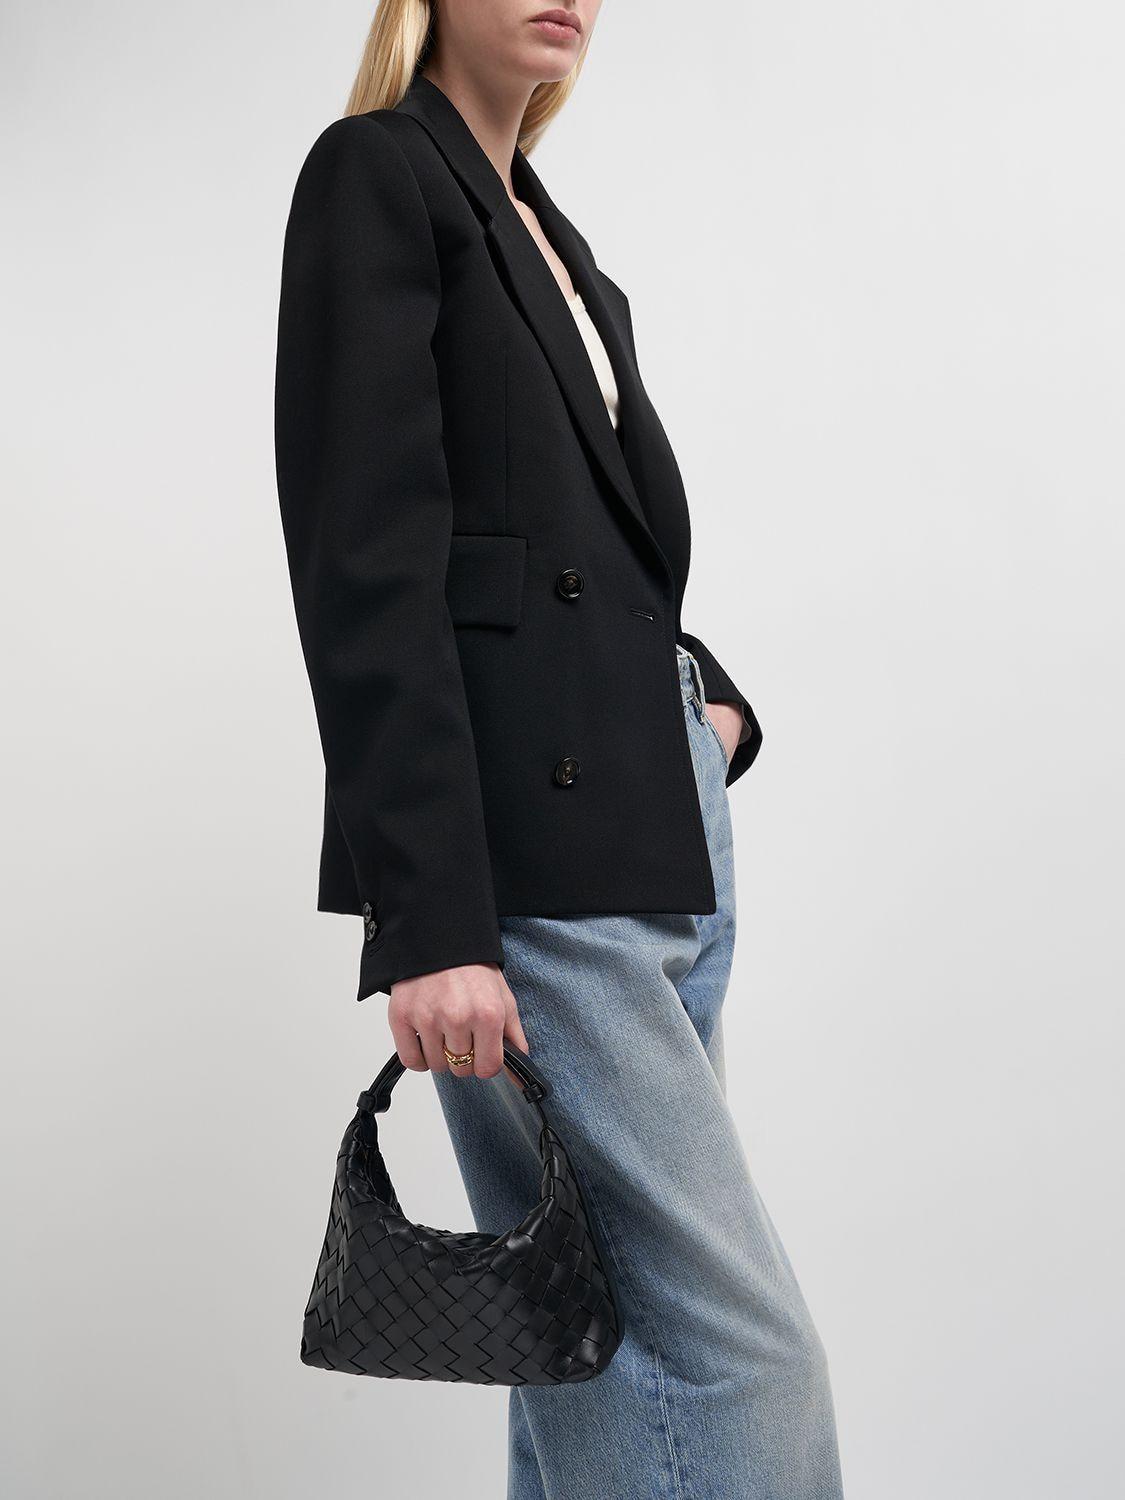 Bottega Veneta Mini Wallace Leather Shoulder Bag in Black